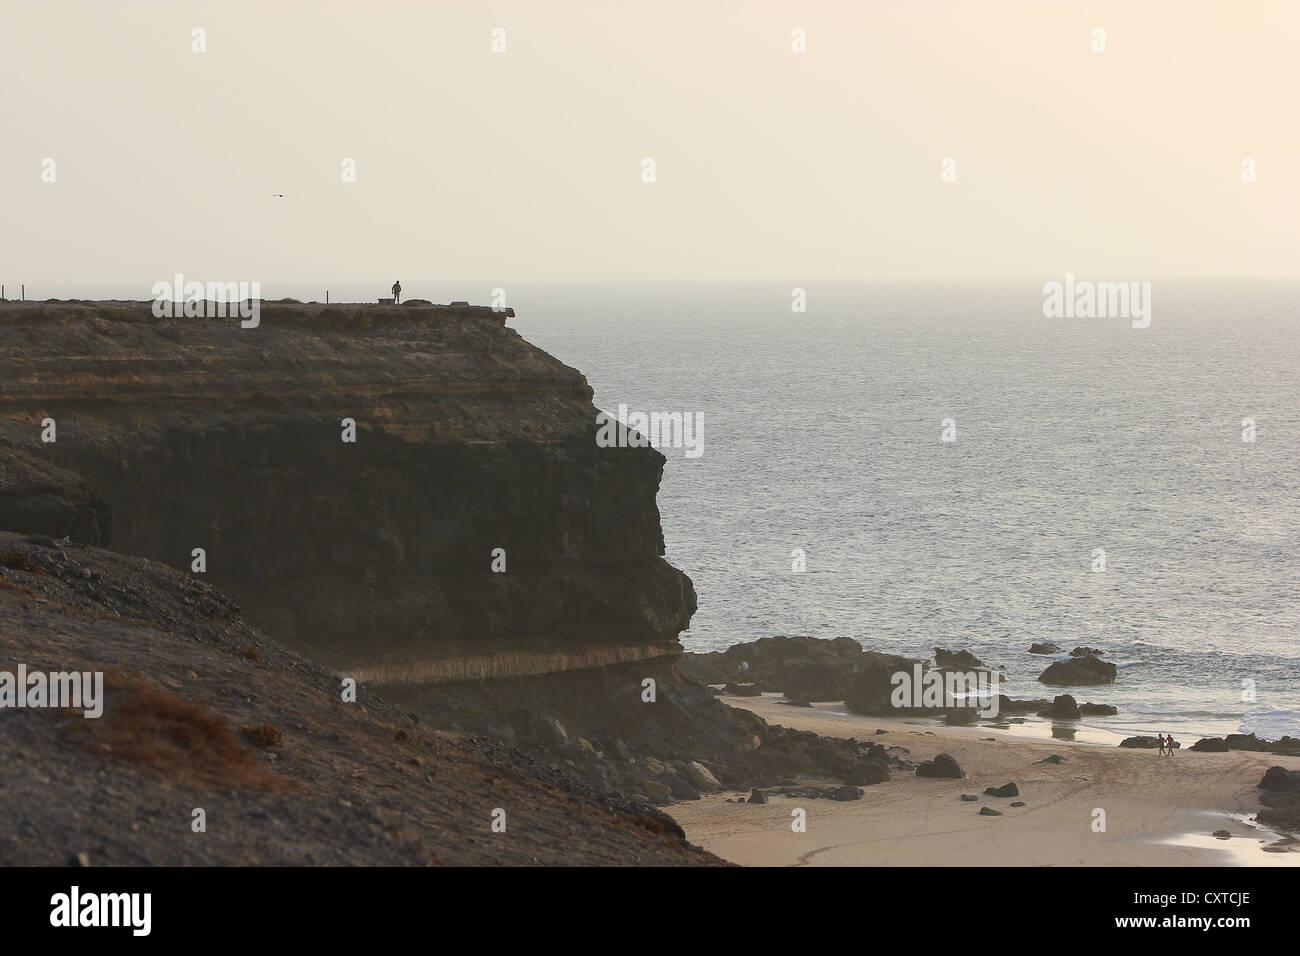 Fuerteventura, a beautiful deserted beach, seaside, sand, Canary Islands, Spain Stock Photo